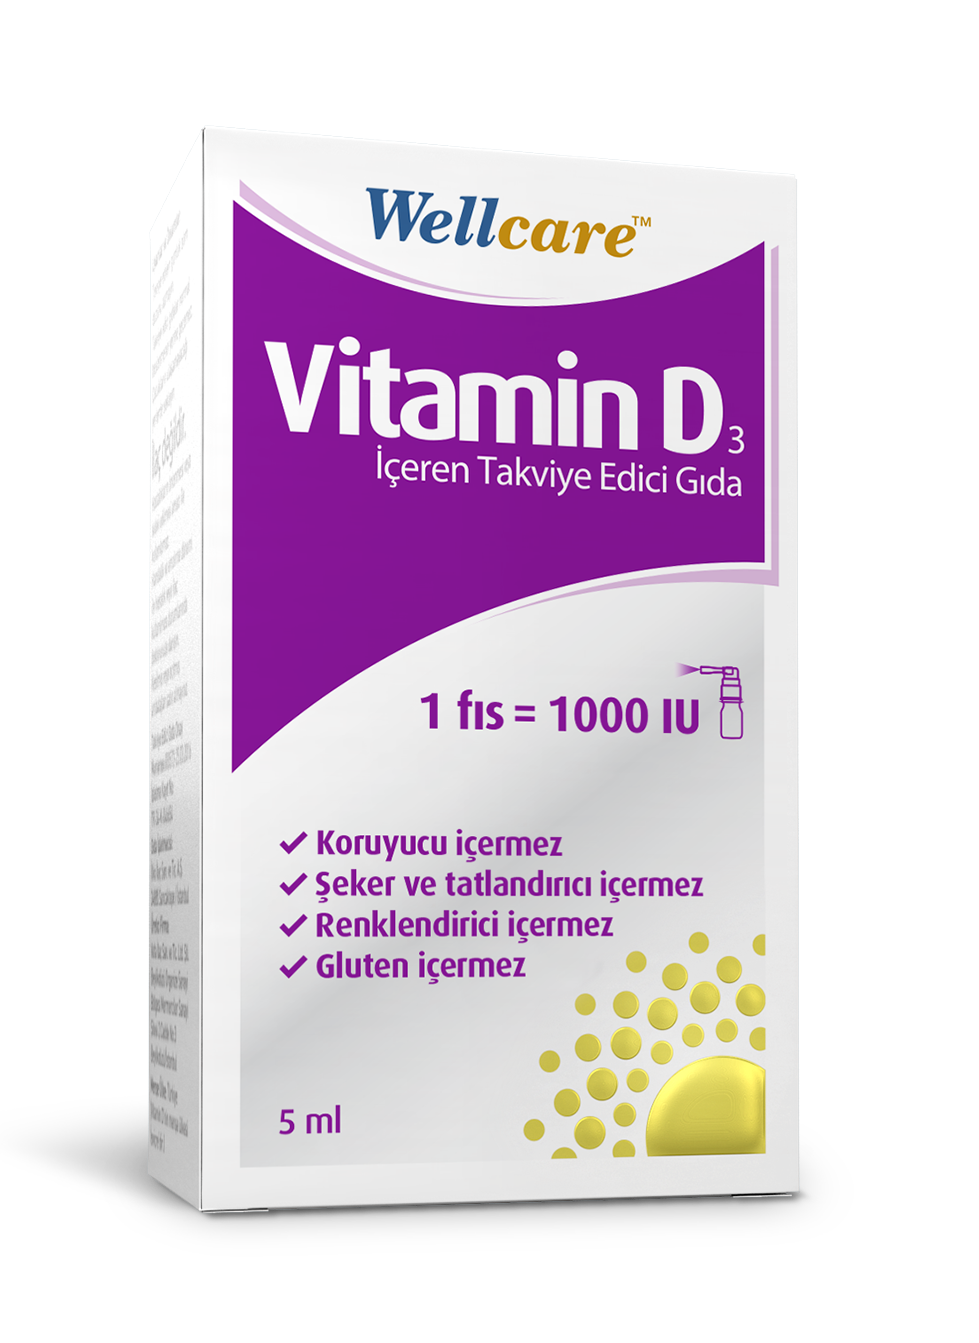 Wellcare Vitamin D3 1000 IU Wellcare Türkiye